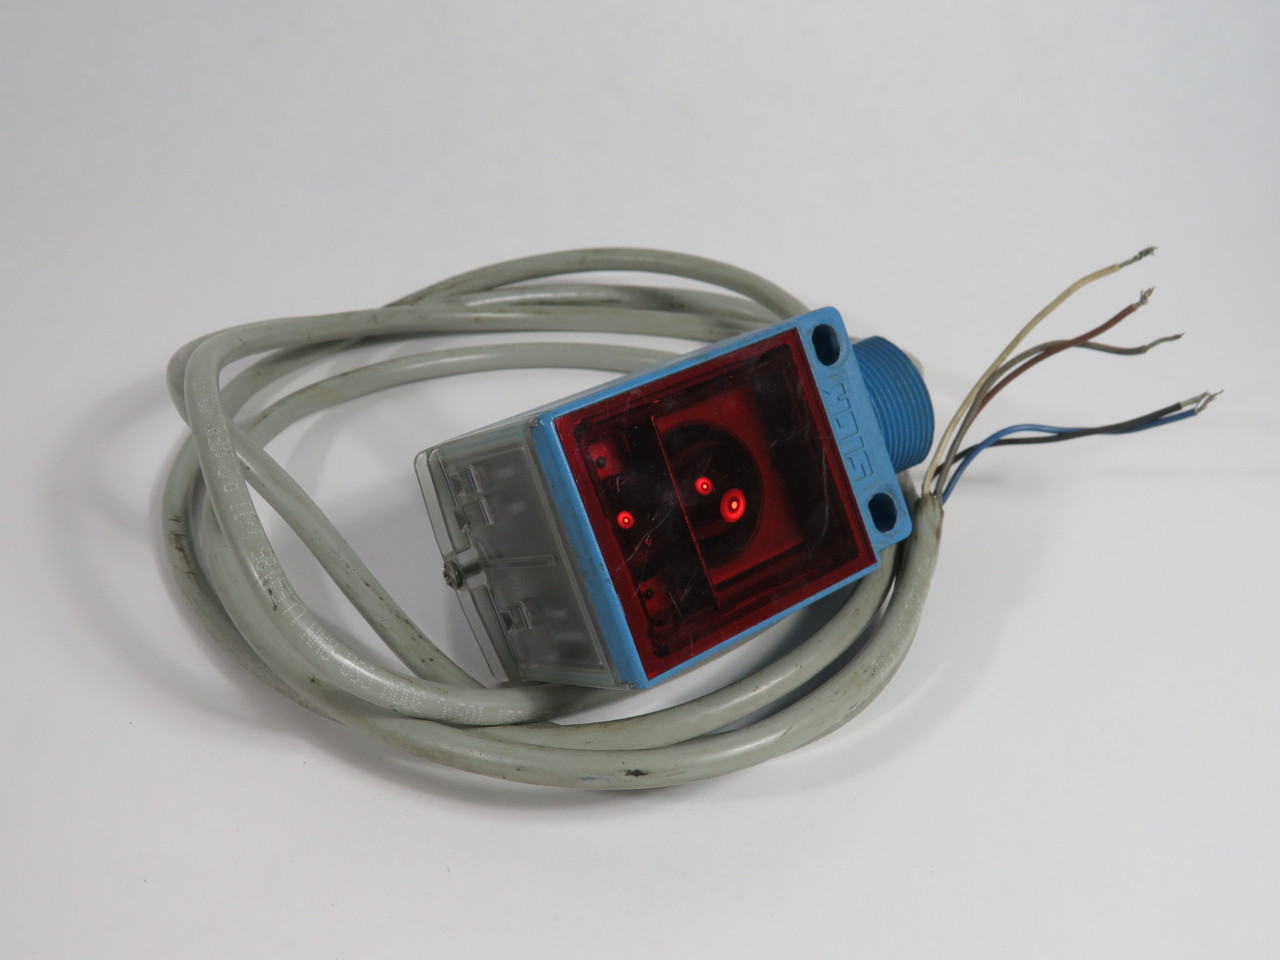 Sick WT2000-B1102 Photoelectric Proximity Sensor 10-30VDC 6' CABLE COS DMG USED